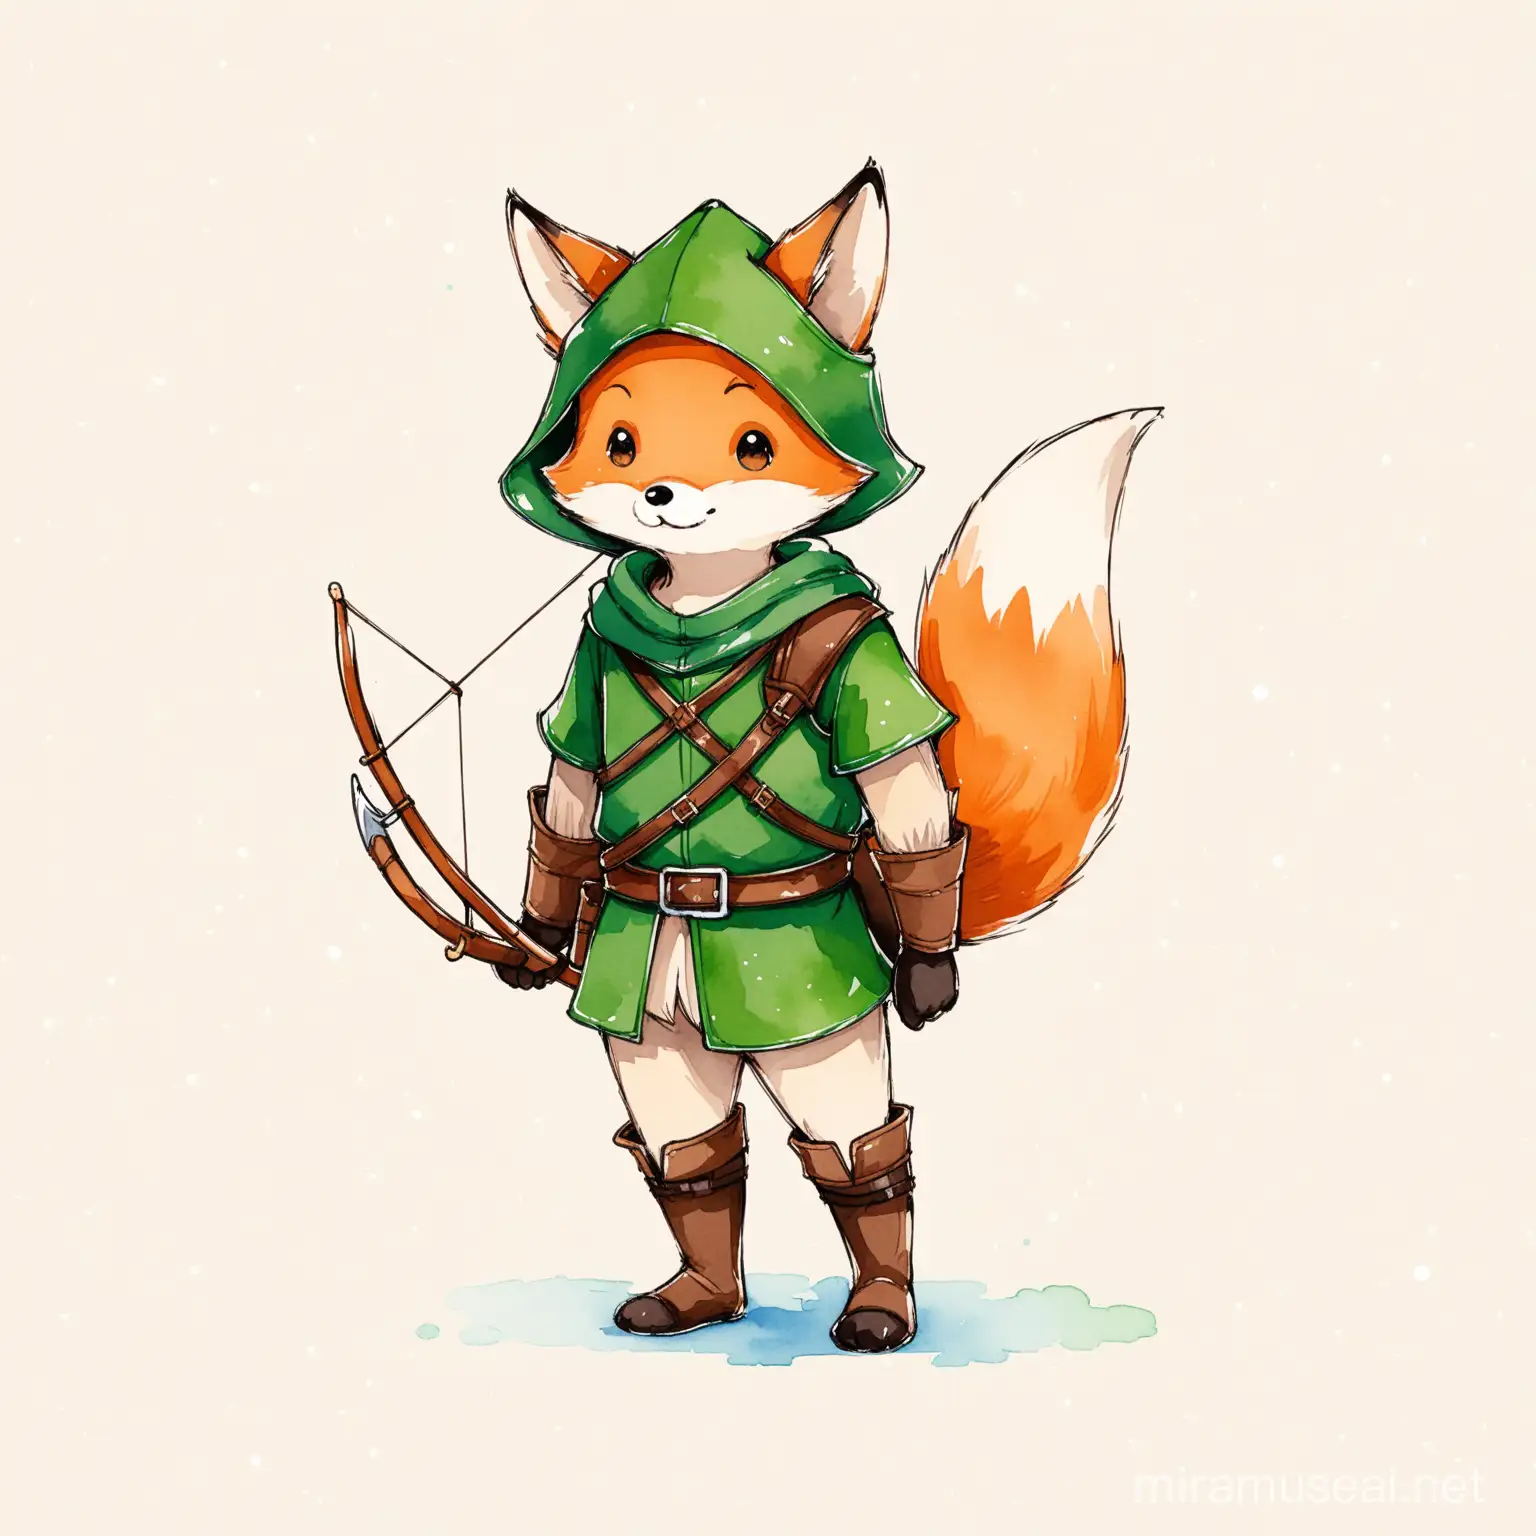 Charming Fox Robin Hood in Minimalist Watercolor Illustration Style